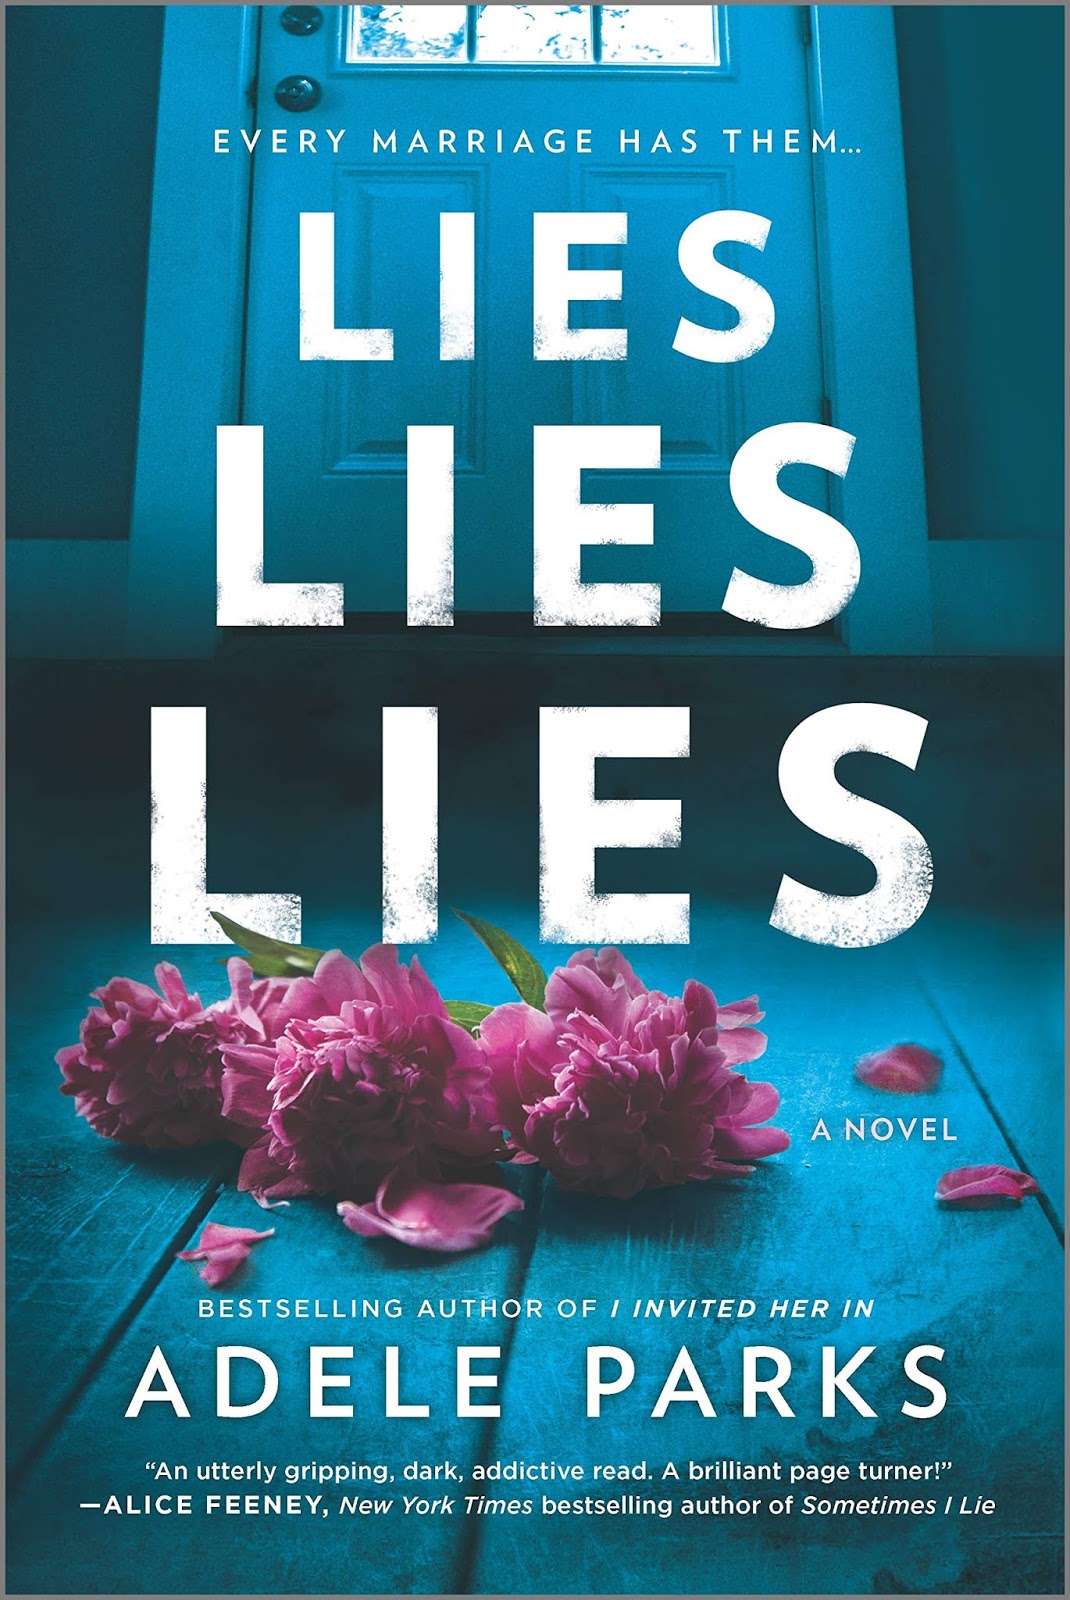 MY BOOK, THE MOVIE: Adele Parks's Lies Lies Lies